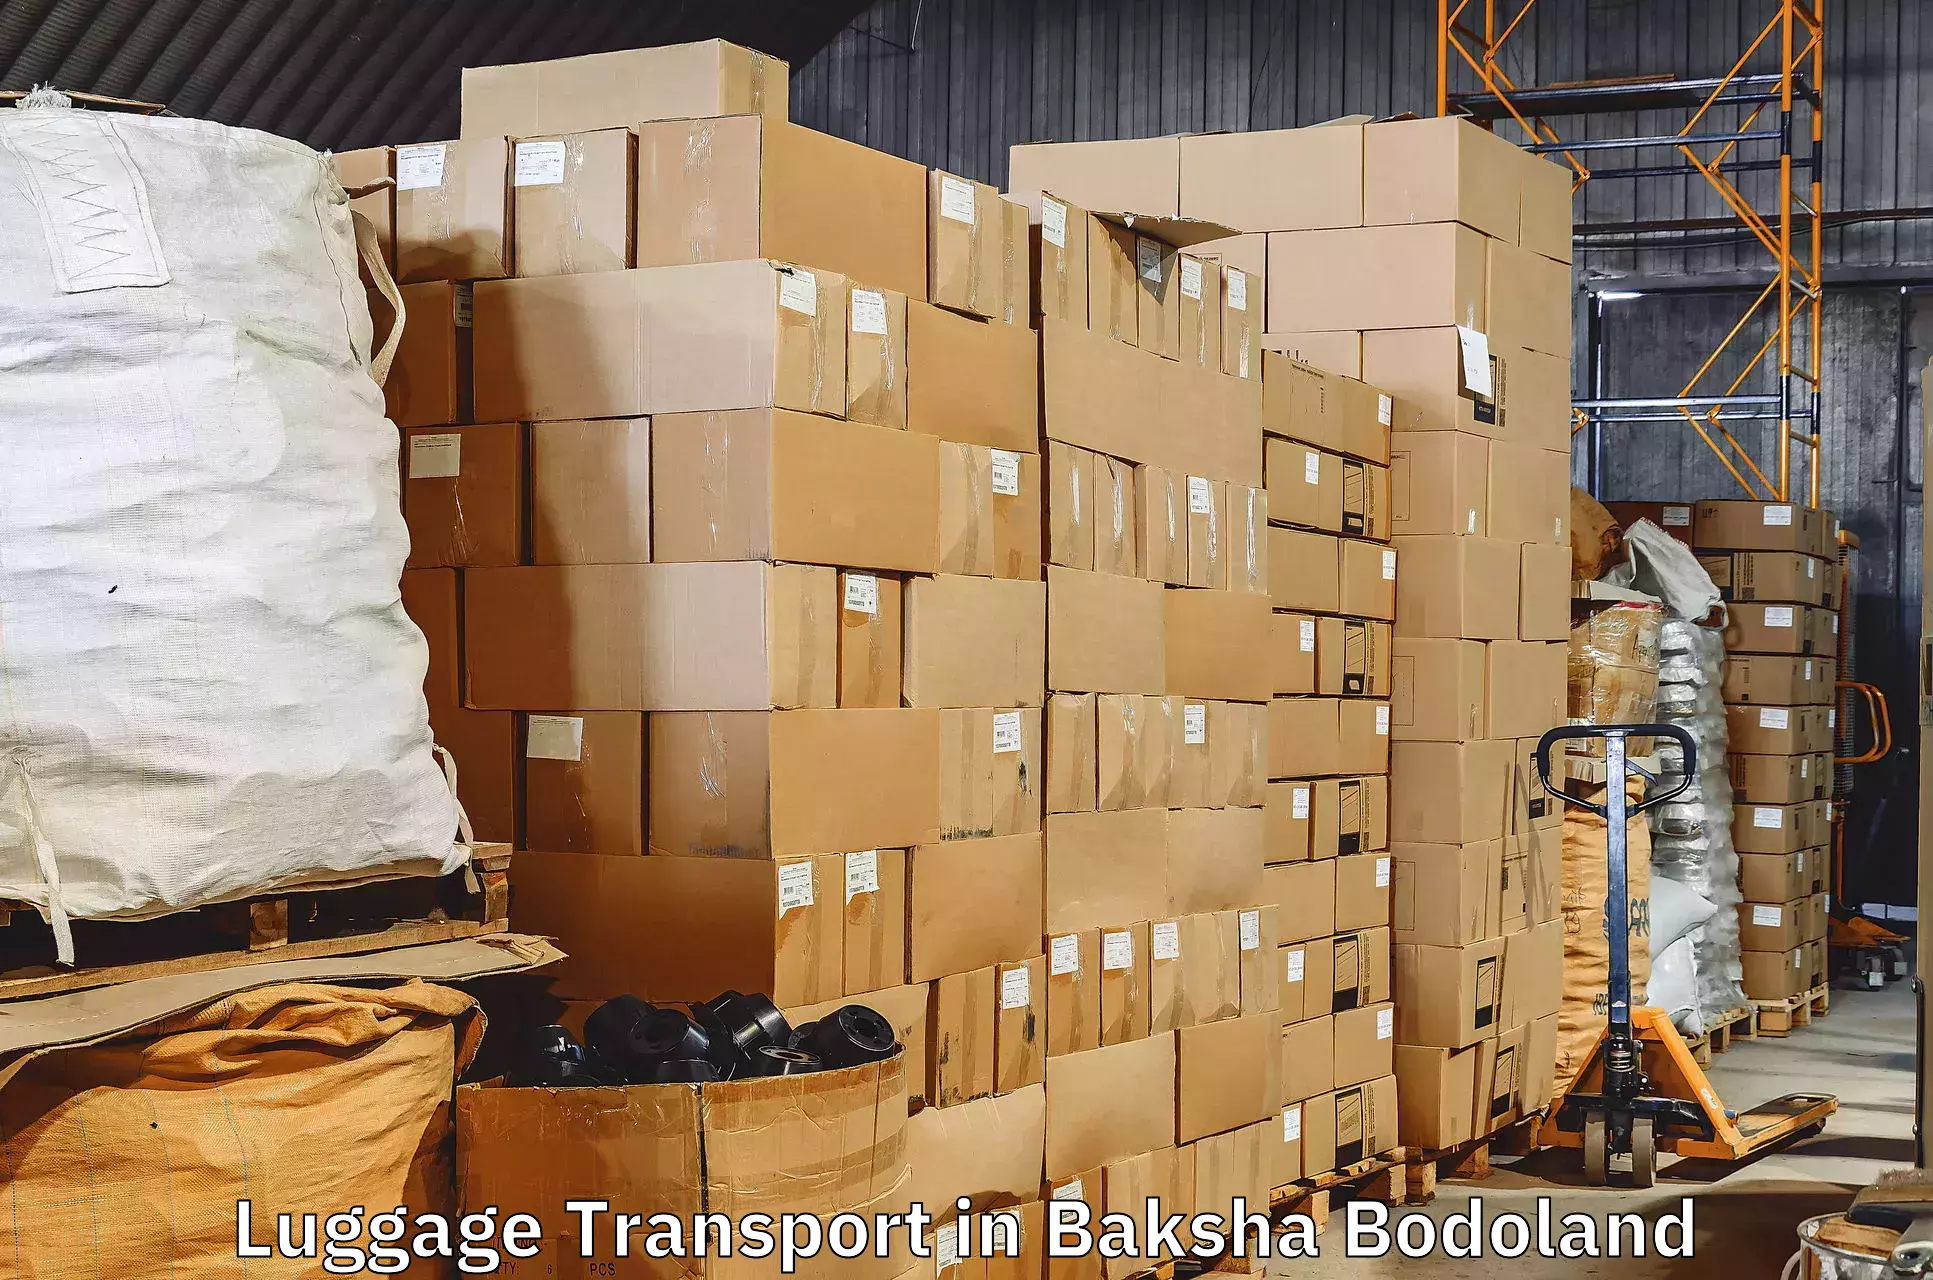 Tailored baggage transport in Baksha Bodoland